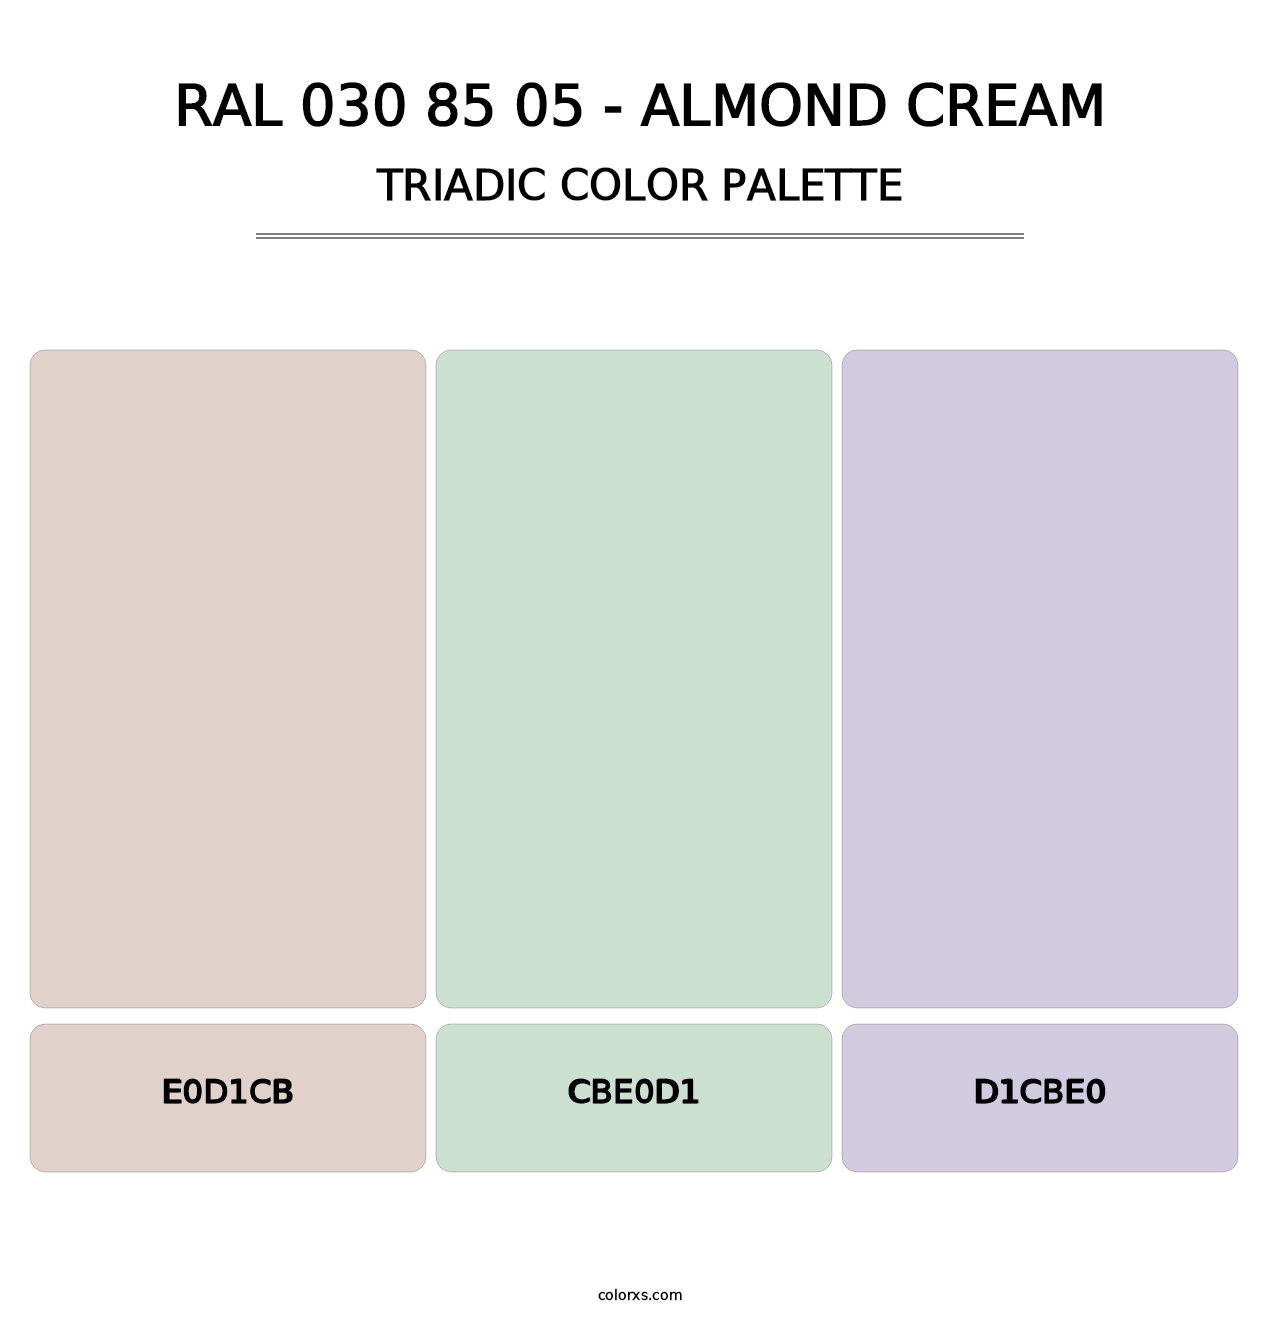 RAL 030 85 05 - Almond Cream - Triadic Color Palette